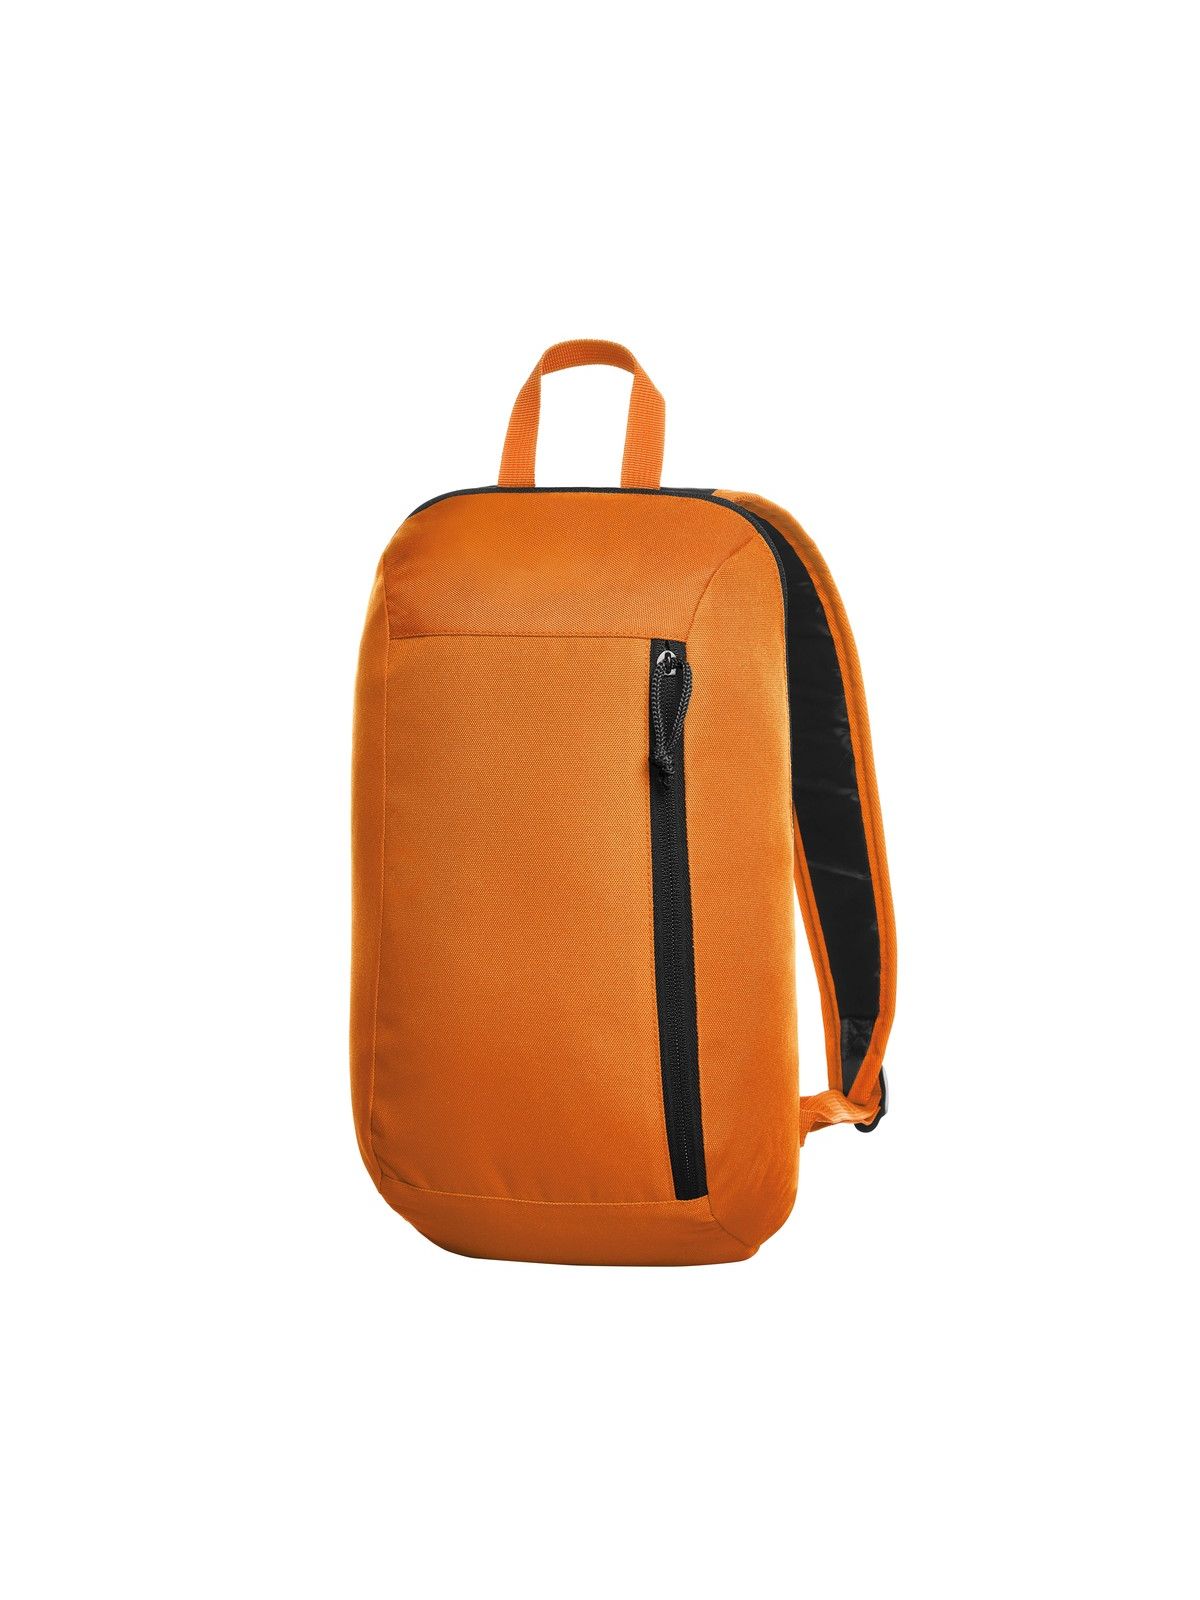 flow-backpack-orange.webp